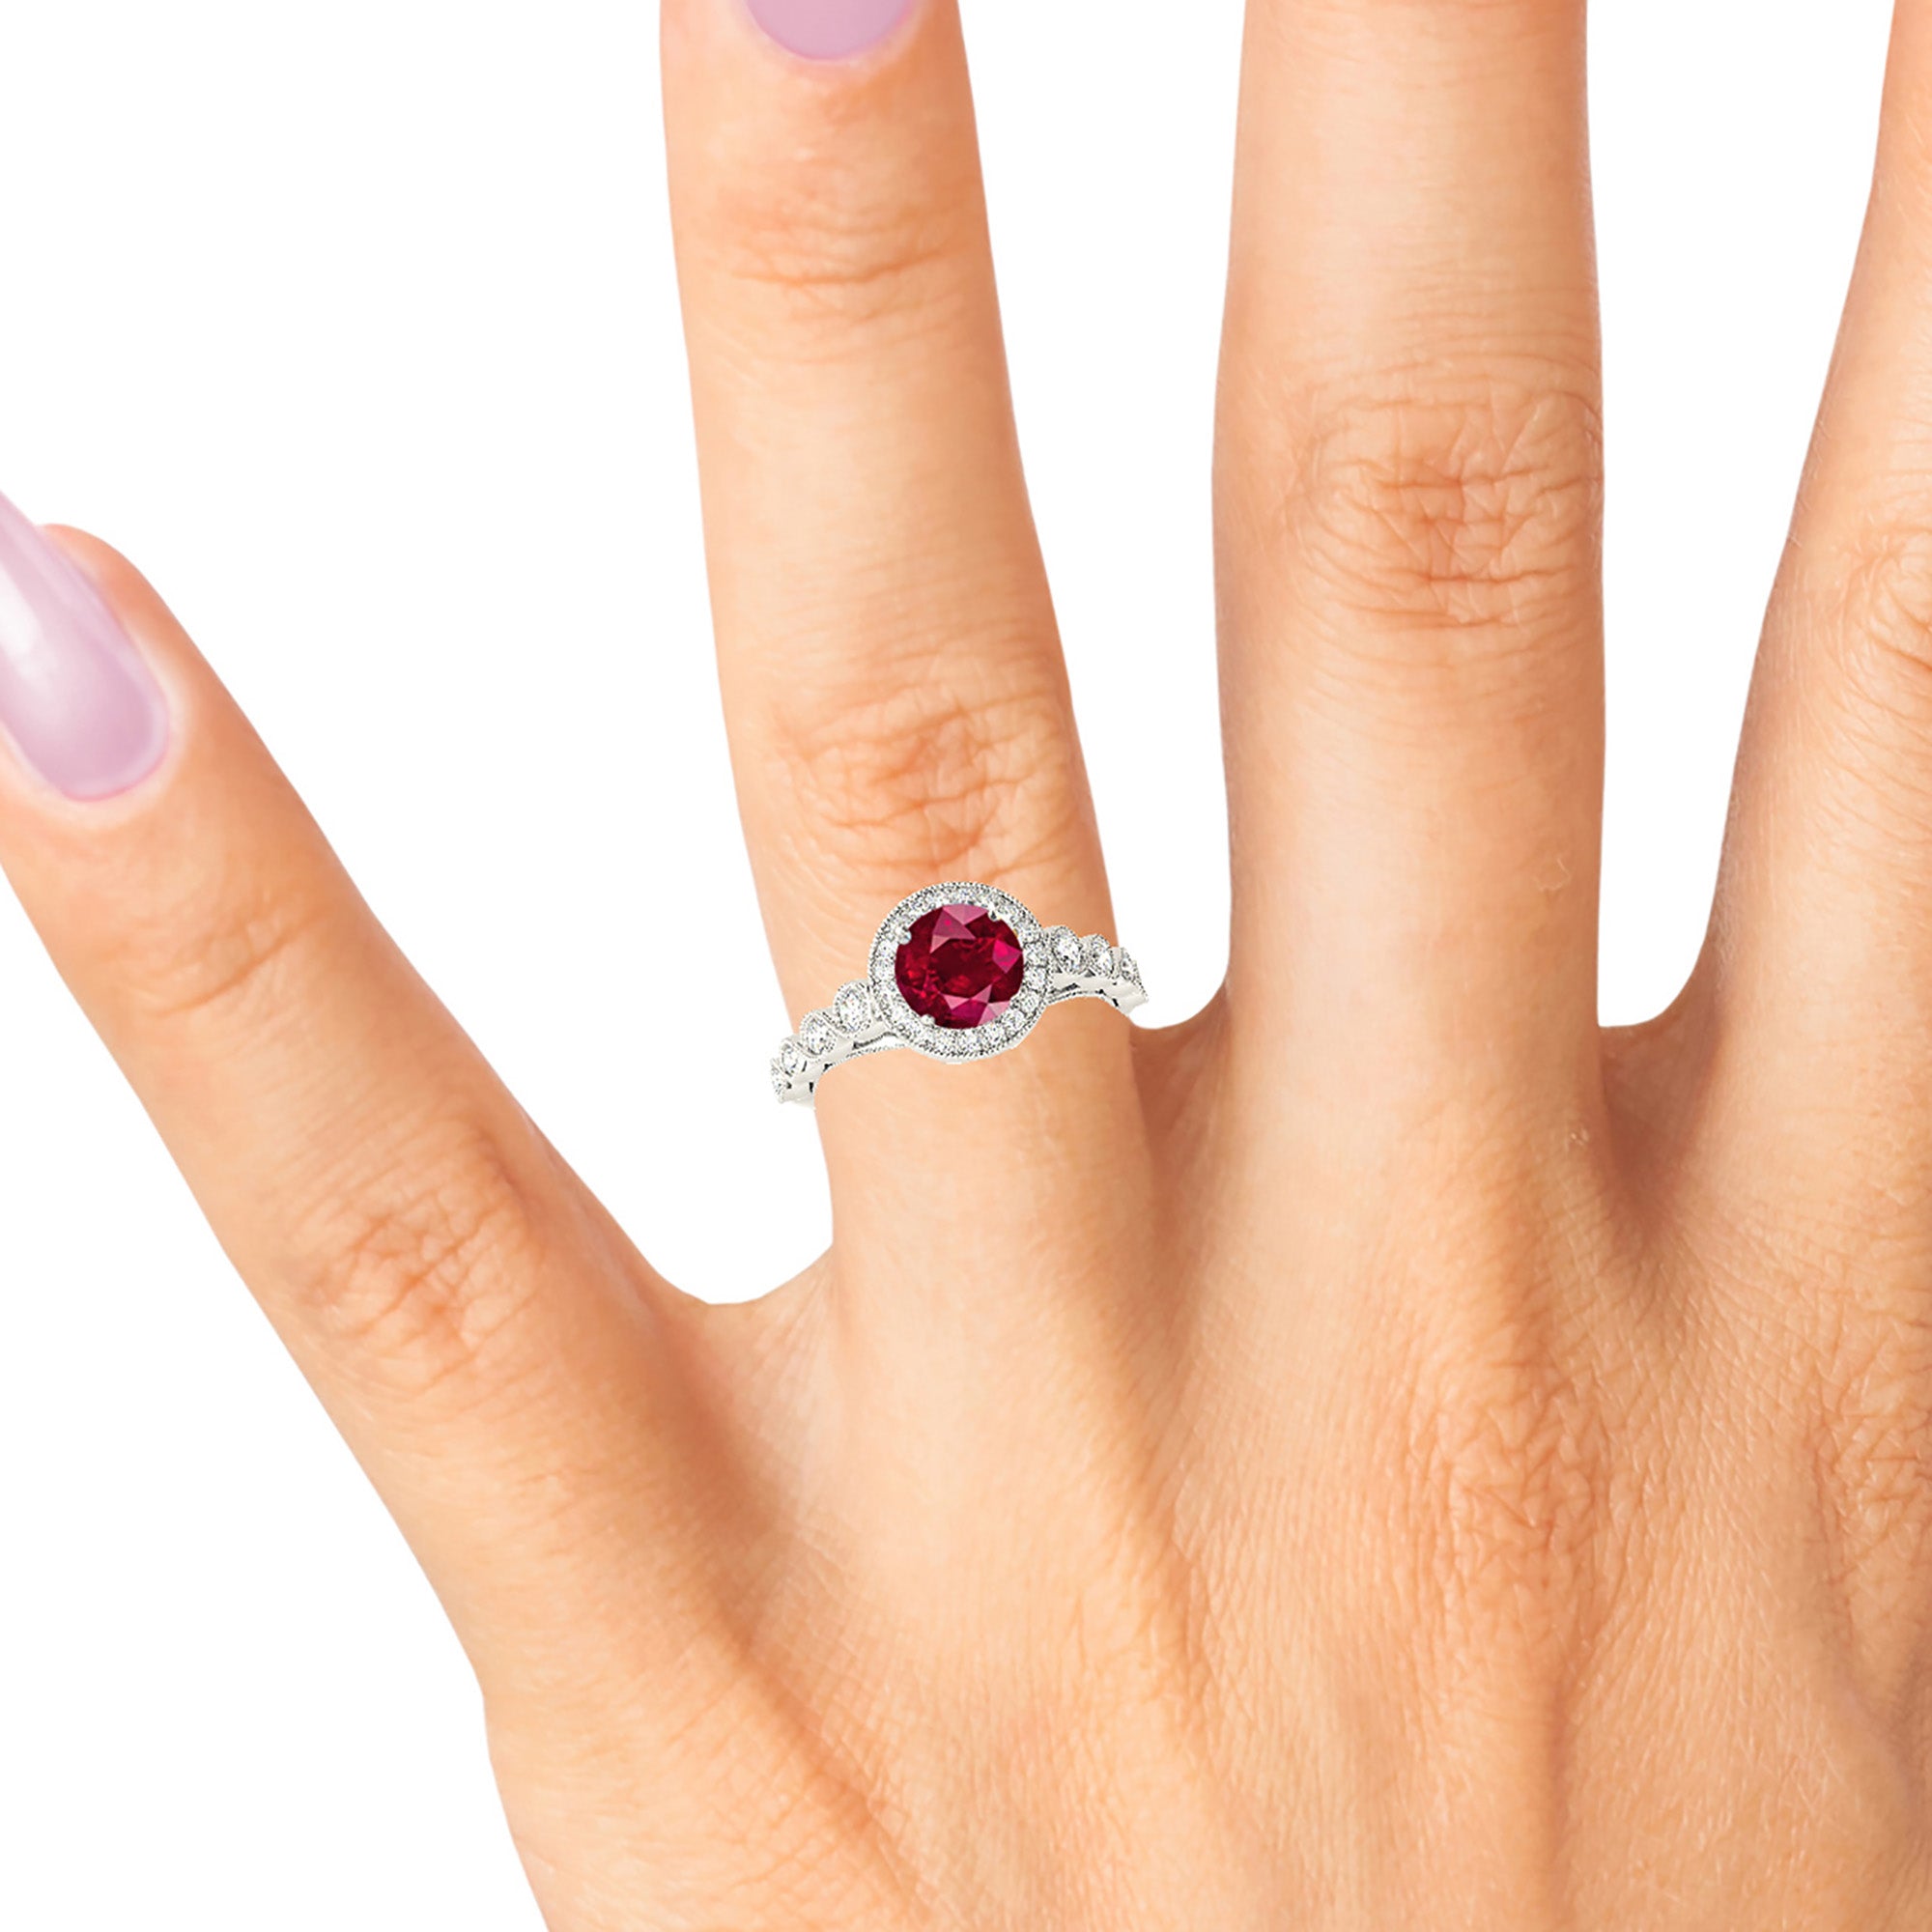 1.35 ct. Genuine Ruby Ring With 0.35 ctw. Diamond Halo,Swirly Milgrain Diamond Band, Under Halo Accent Diamond |Ruby Halo Ring |Natural Ruby-in 14K/18K White, Yellow, Rose Gold and Platinum - Christmas Jewelry Gift -VIRABYANI